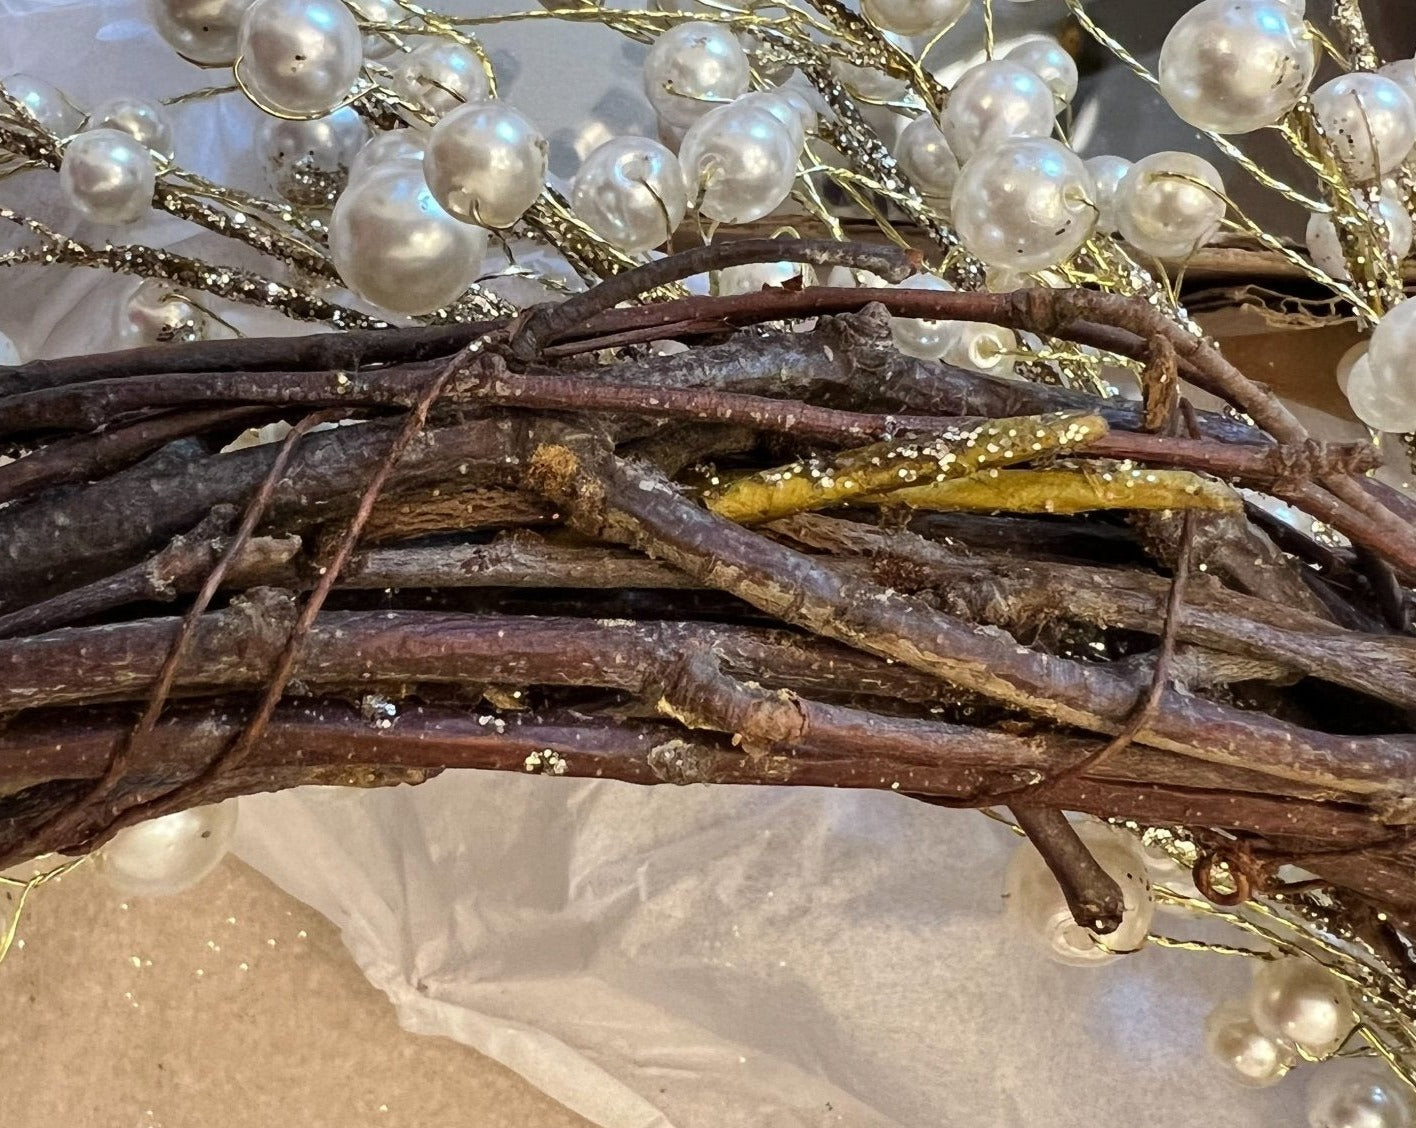 Pearl glittered wreath (12”) - DiamondValeDecor